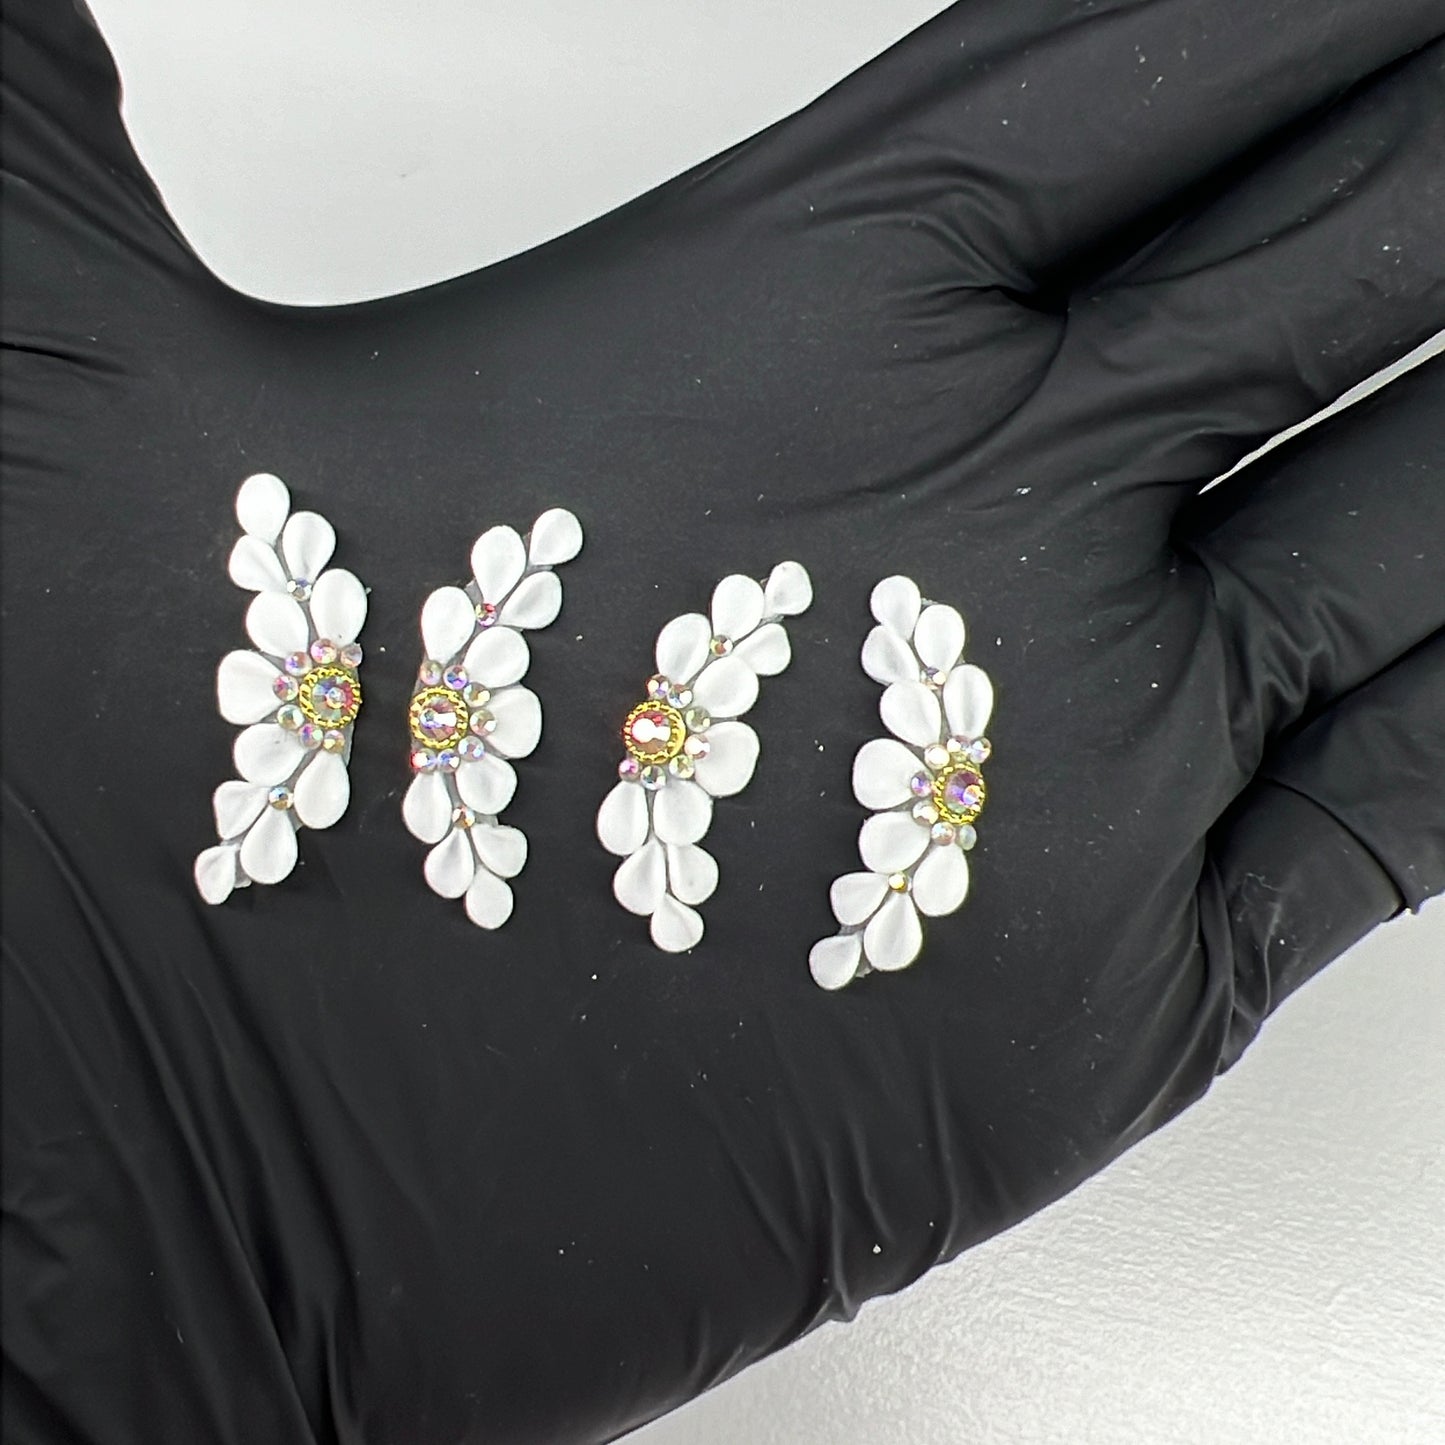 HANDMADE 3D WHITE Acrylic Flowers XLong - 4 pieces